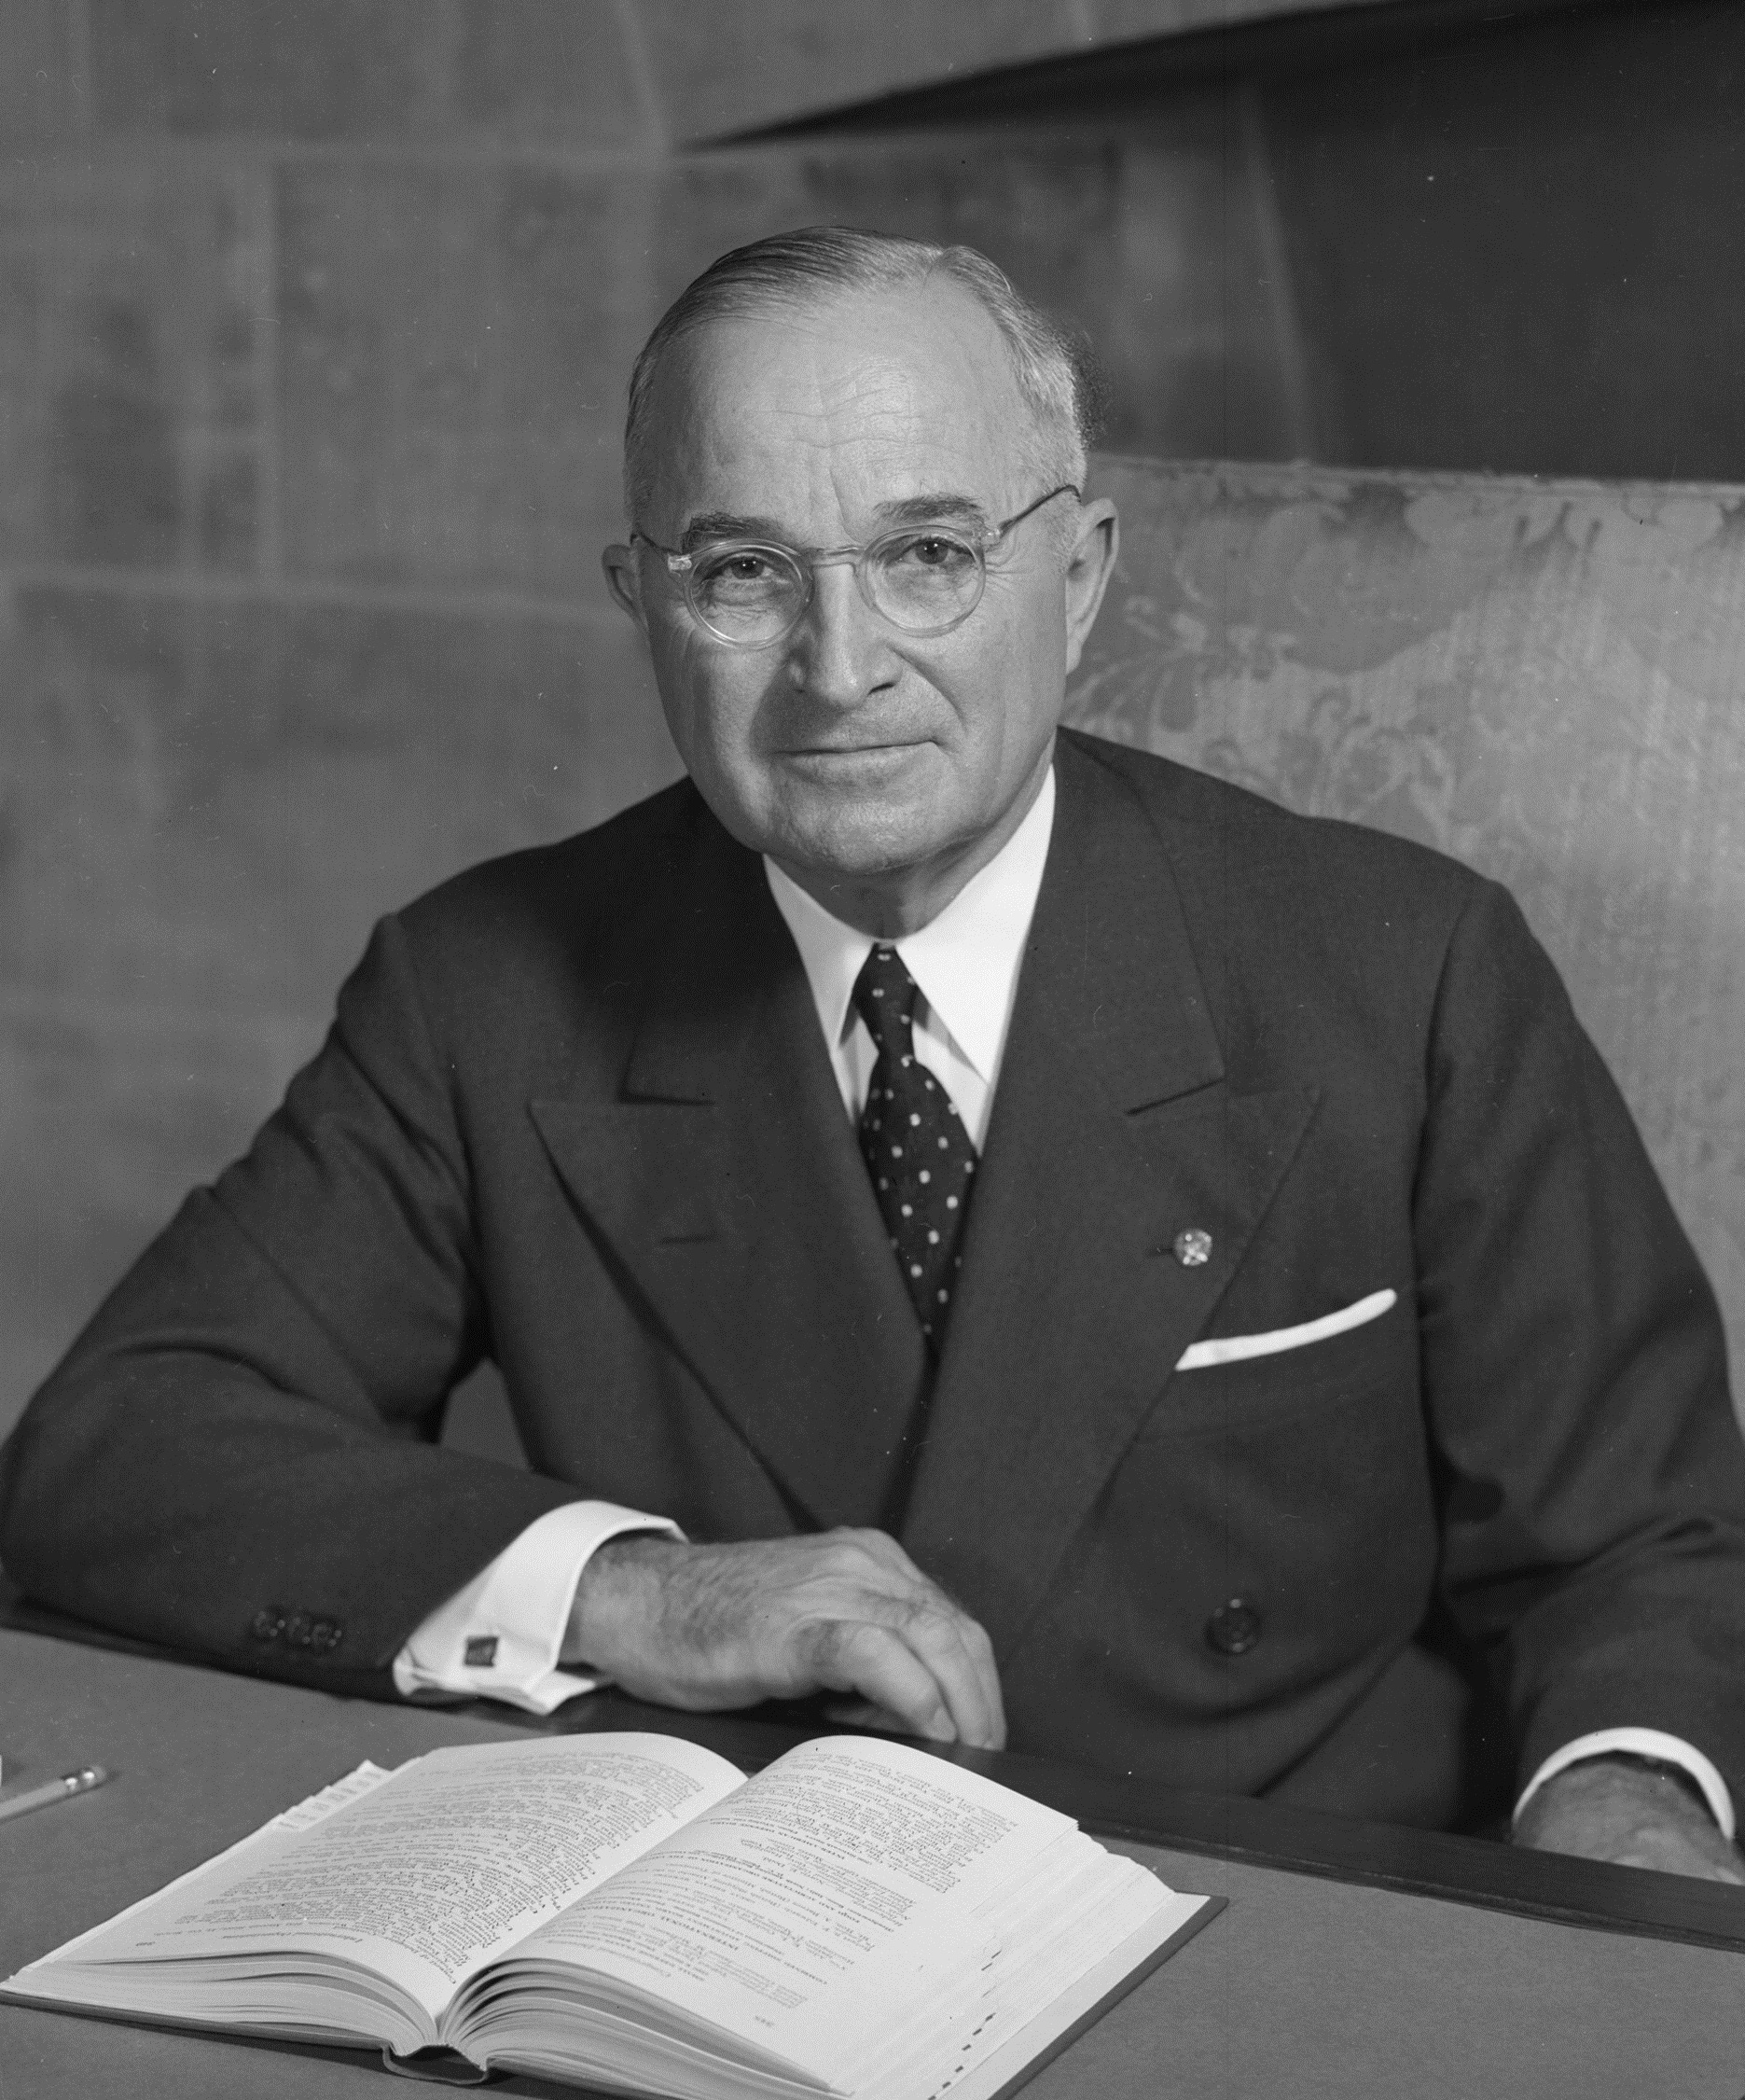 President Harry S. Truman.